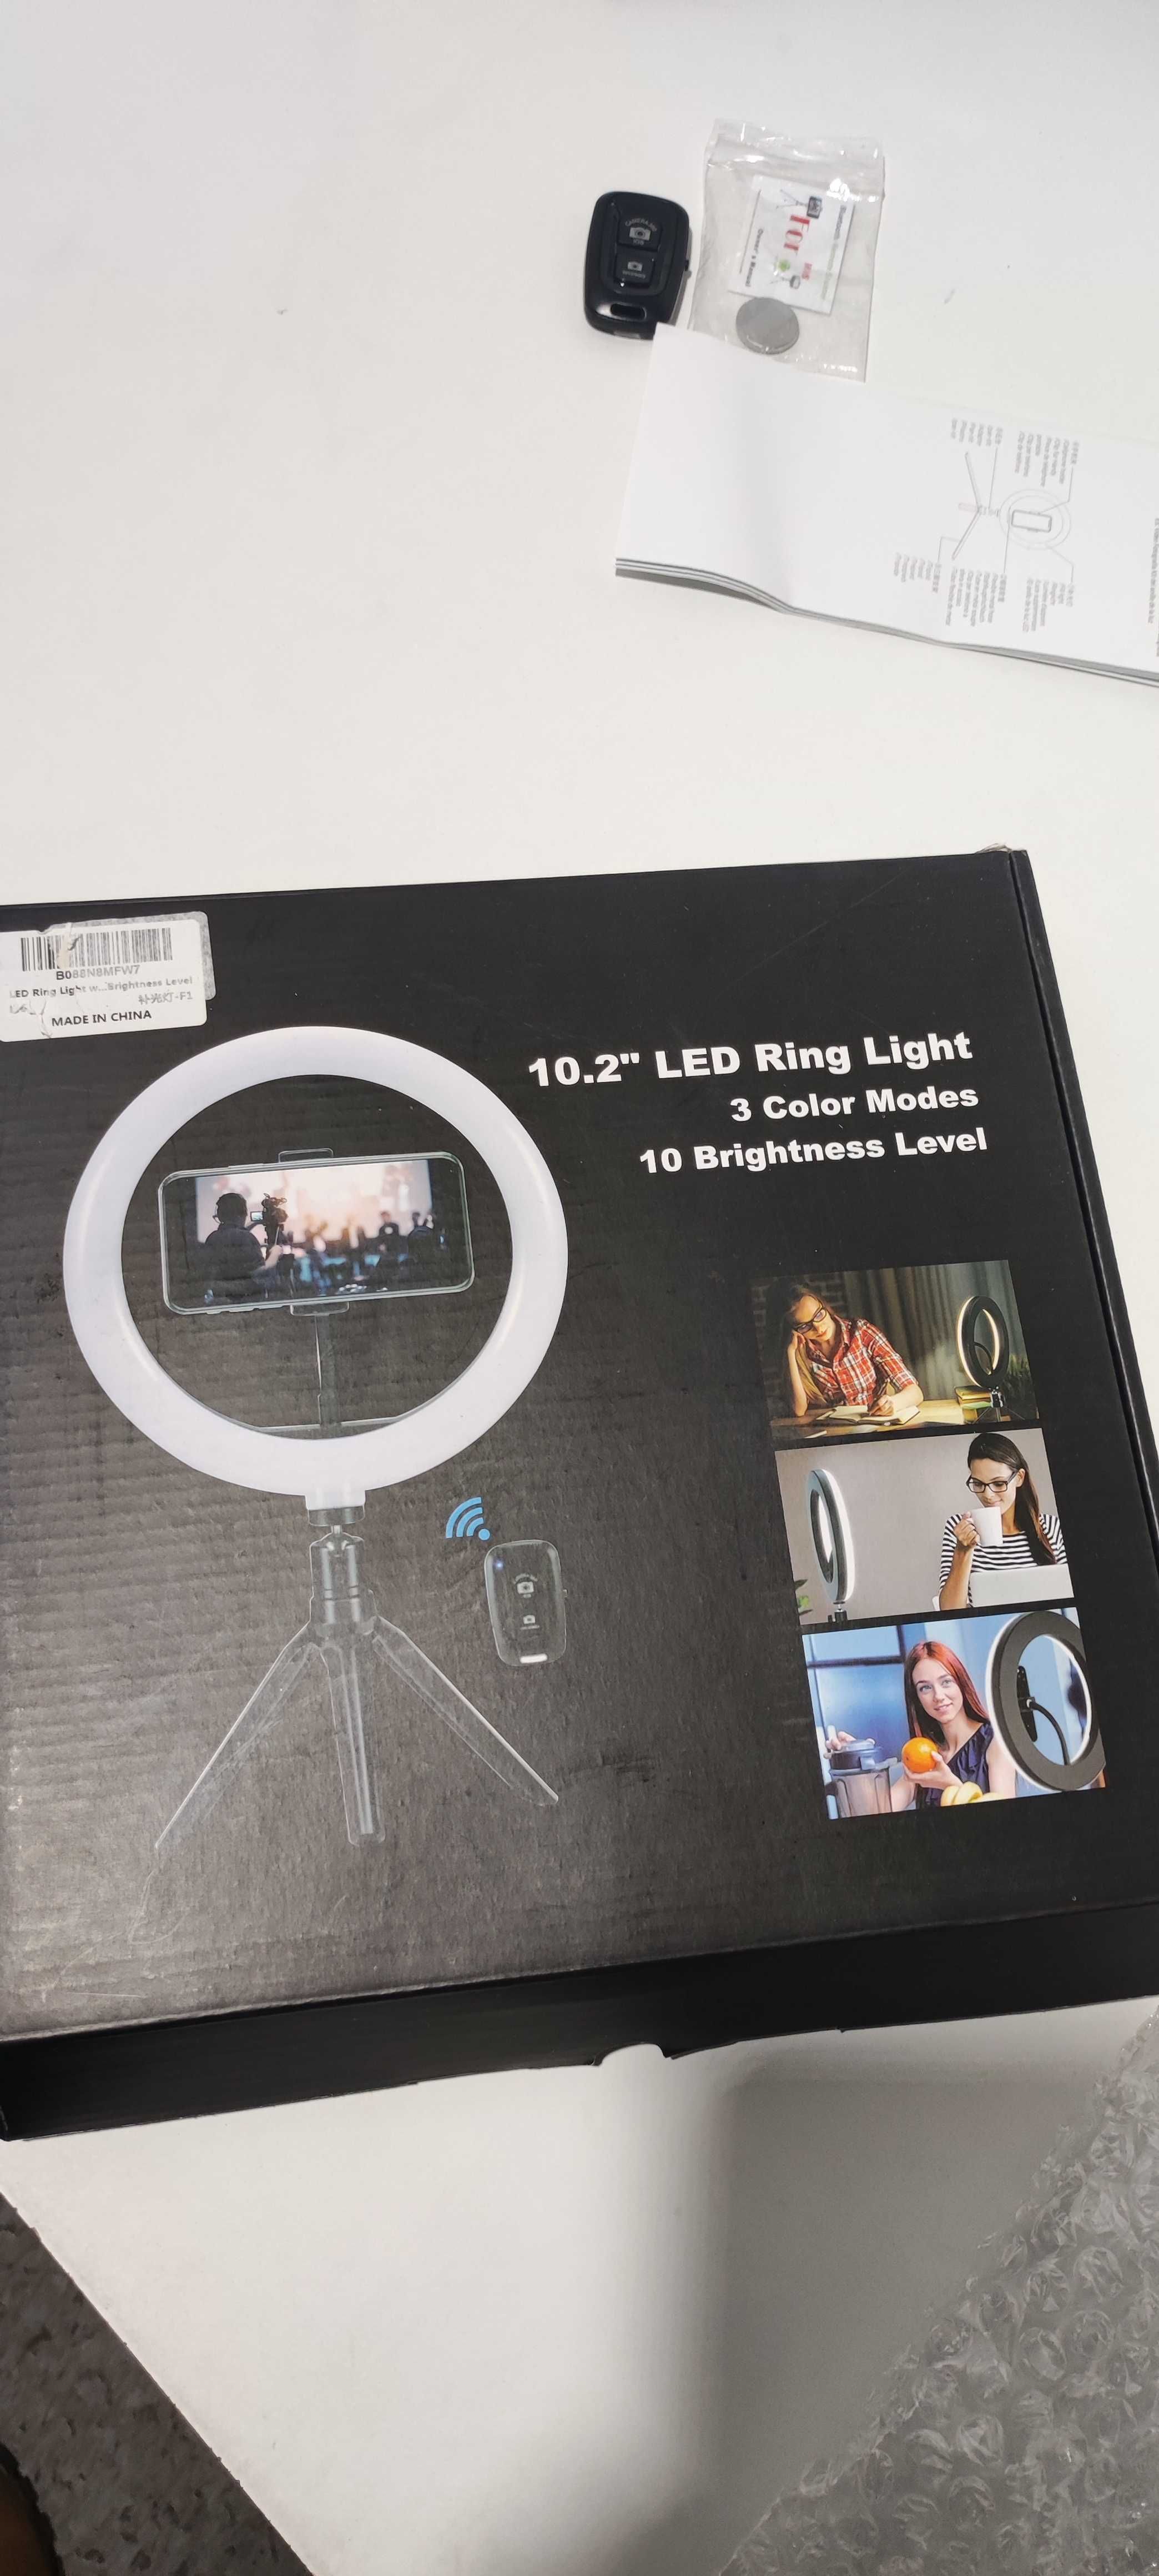 Lampa pierścieniowa 10.2' Led ring light